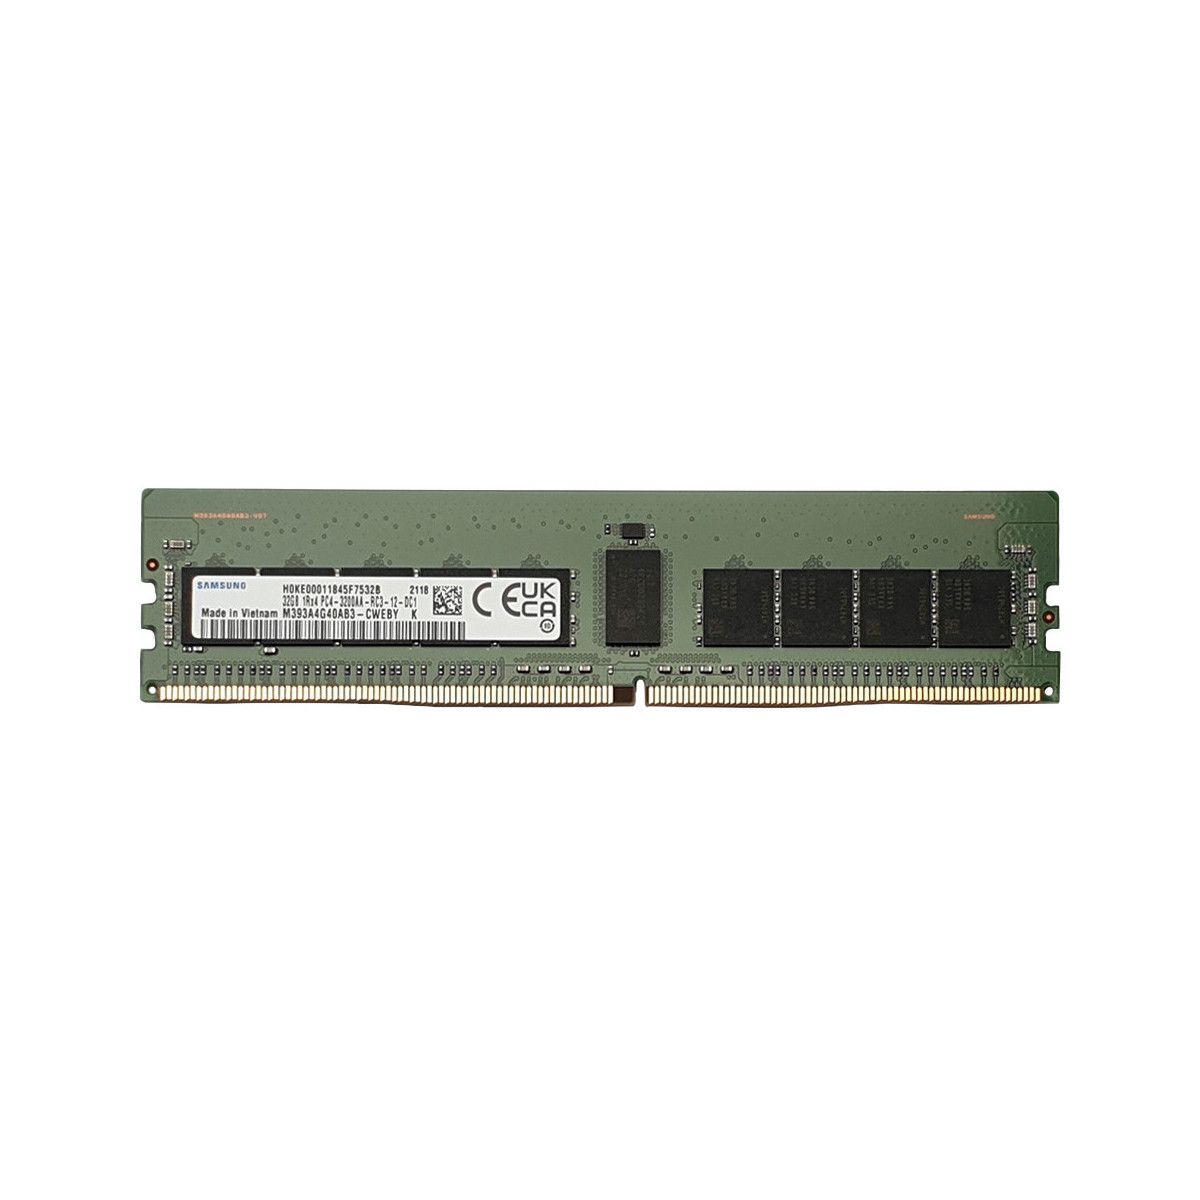 UCS-MR-X32G1RW-MS - Memstar 1x 32GB DDR4-3200 RDIMM PC4-25600R - Mem-Star Kompatybilna pamięć OEM 1 - Memstar 